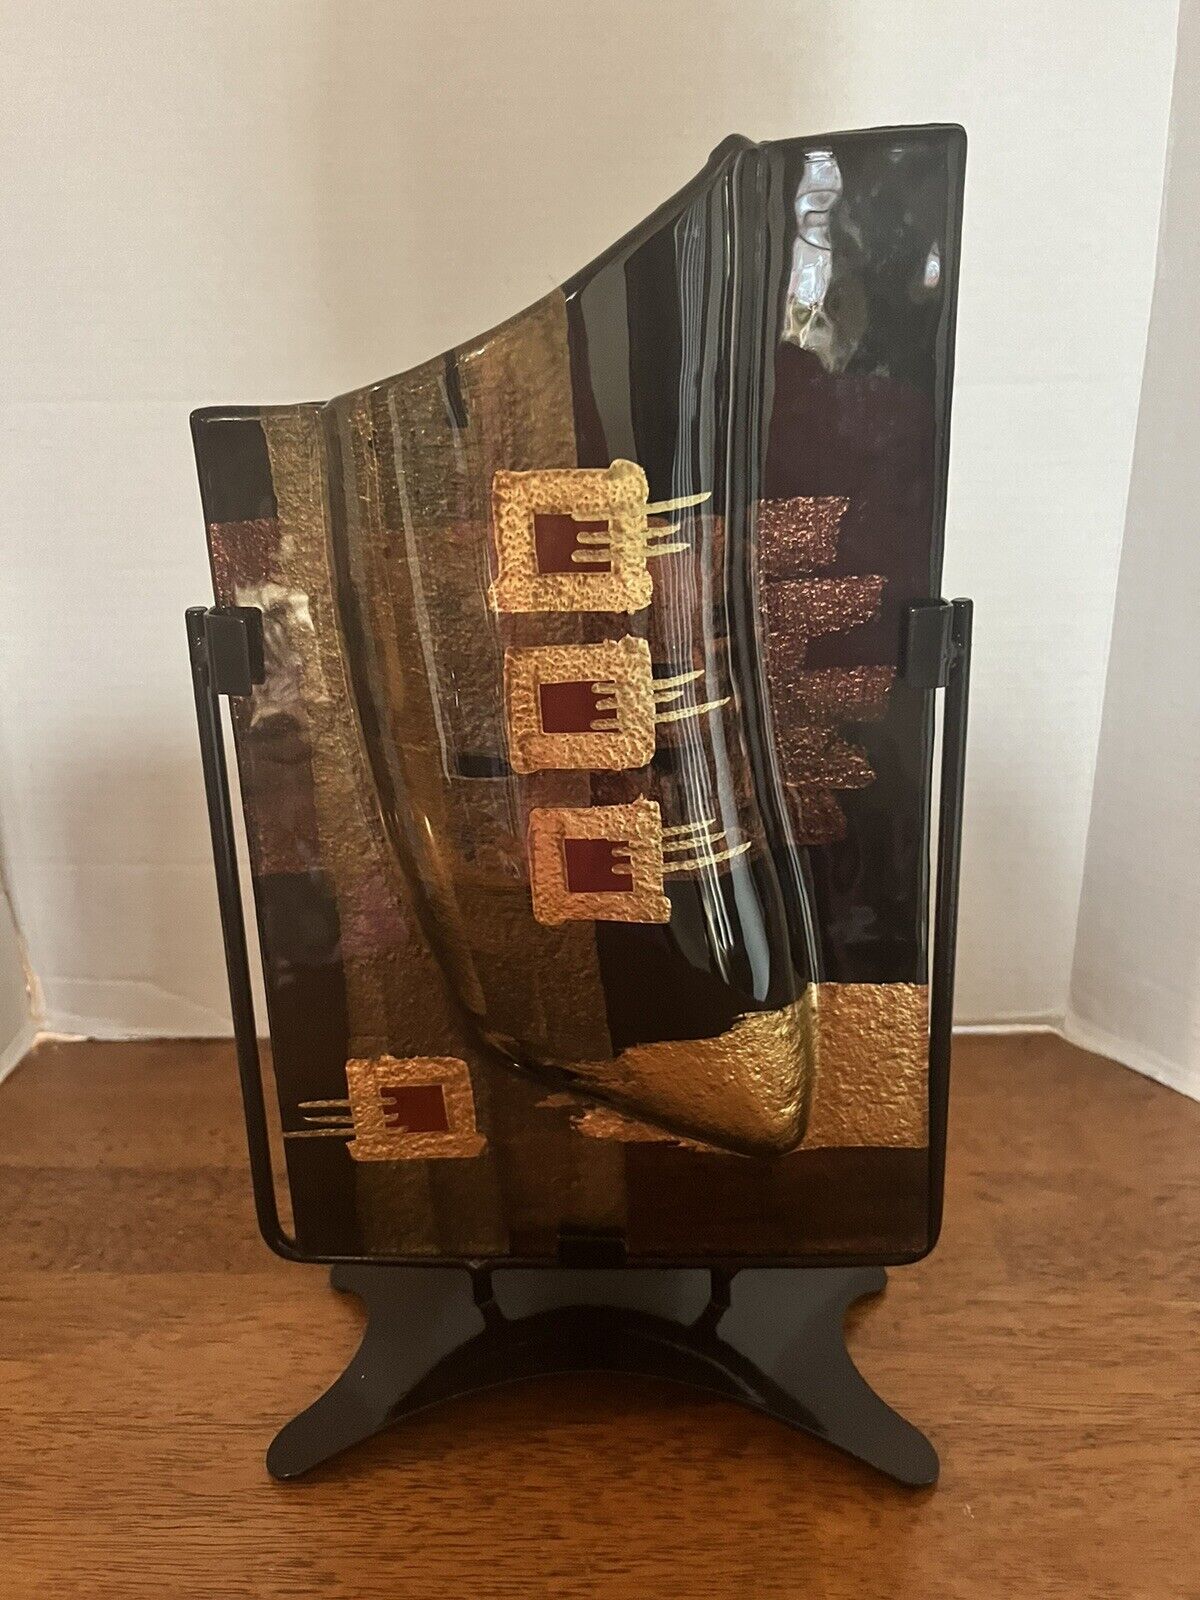 Modern /retro /fused glass/ art vase on metal frame /13 X8”/mint